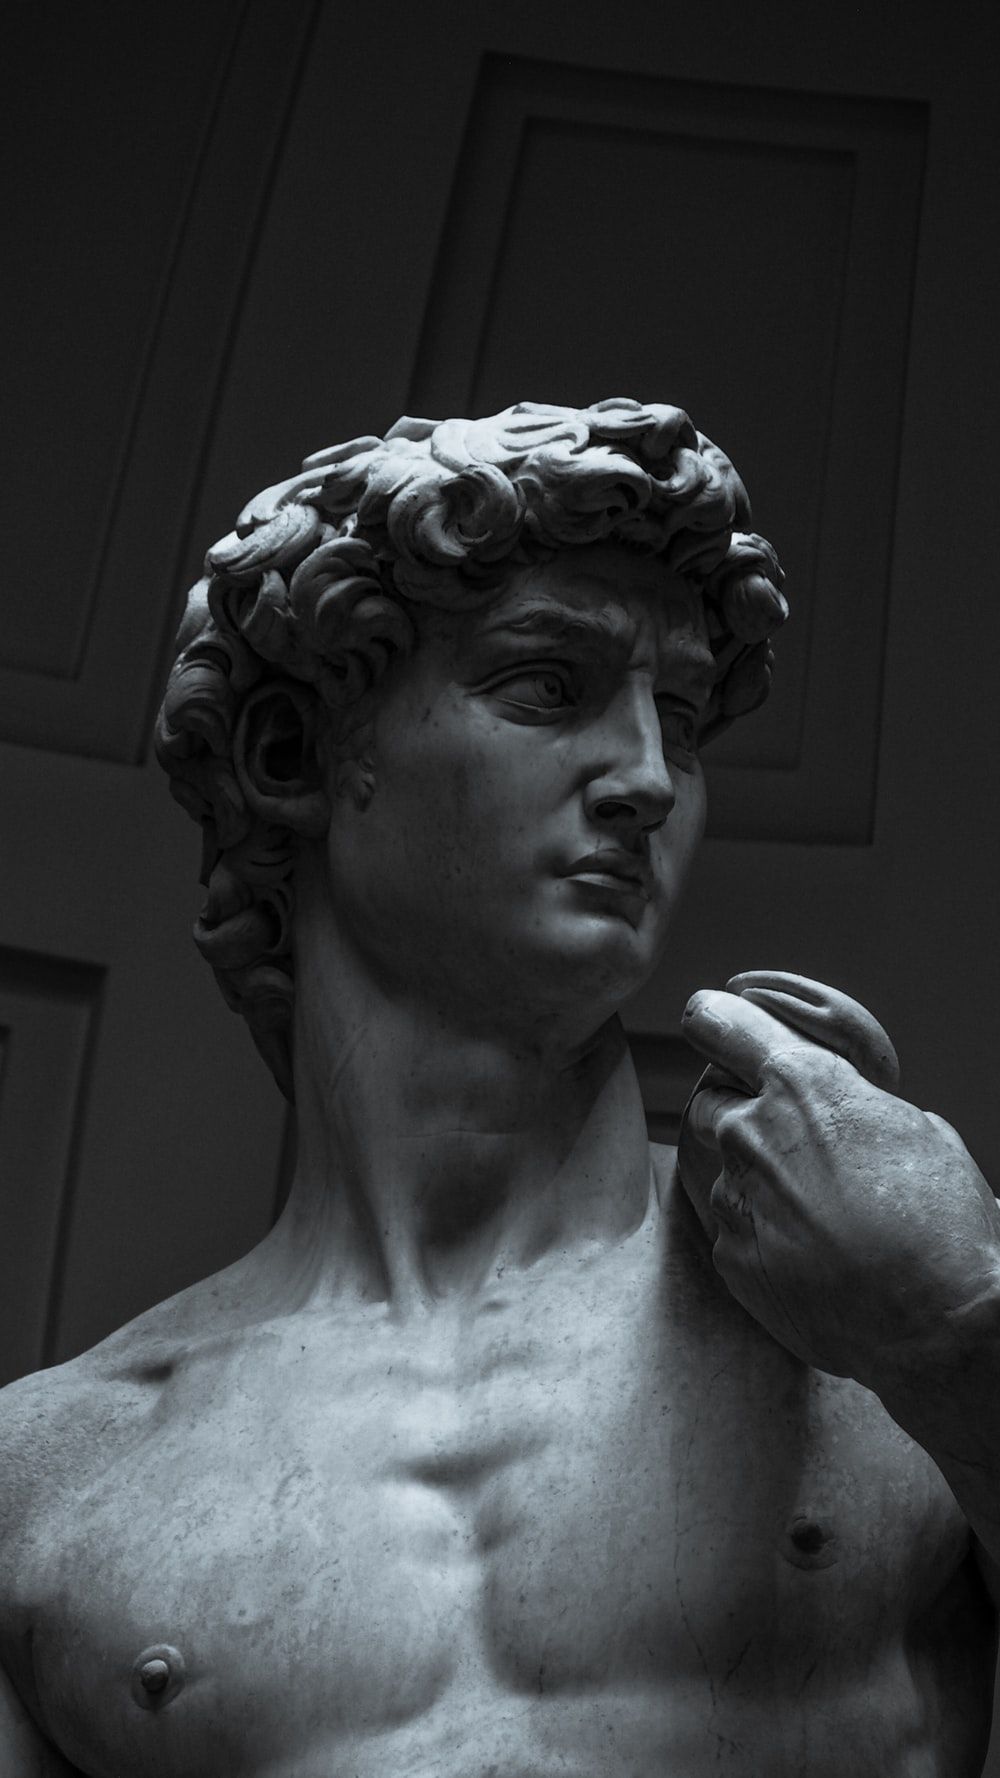 Michelangelo David Picture. Download Free Image